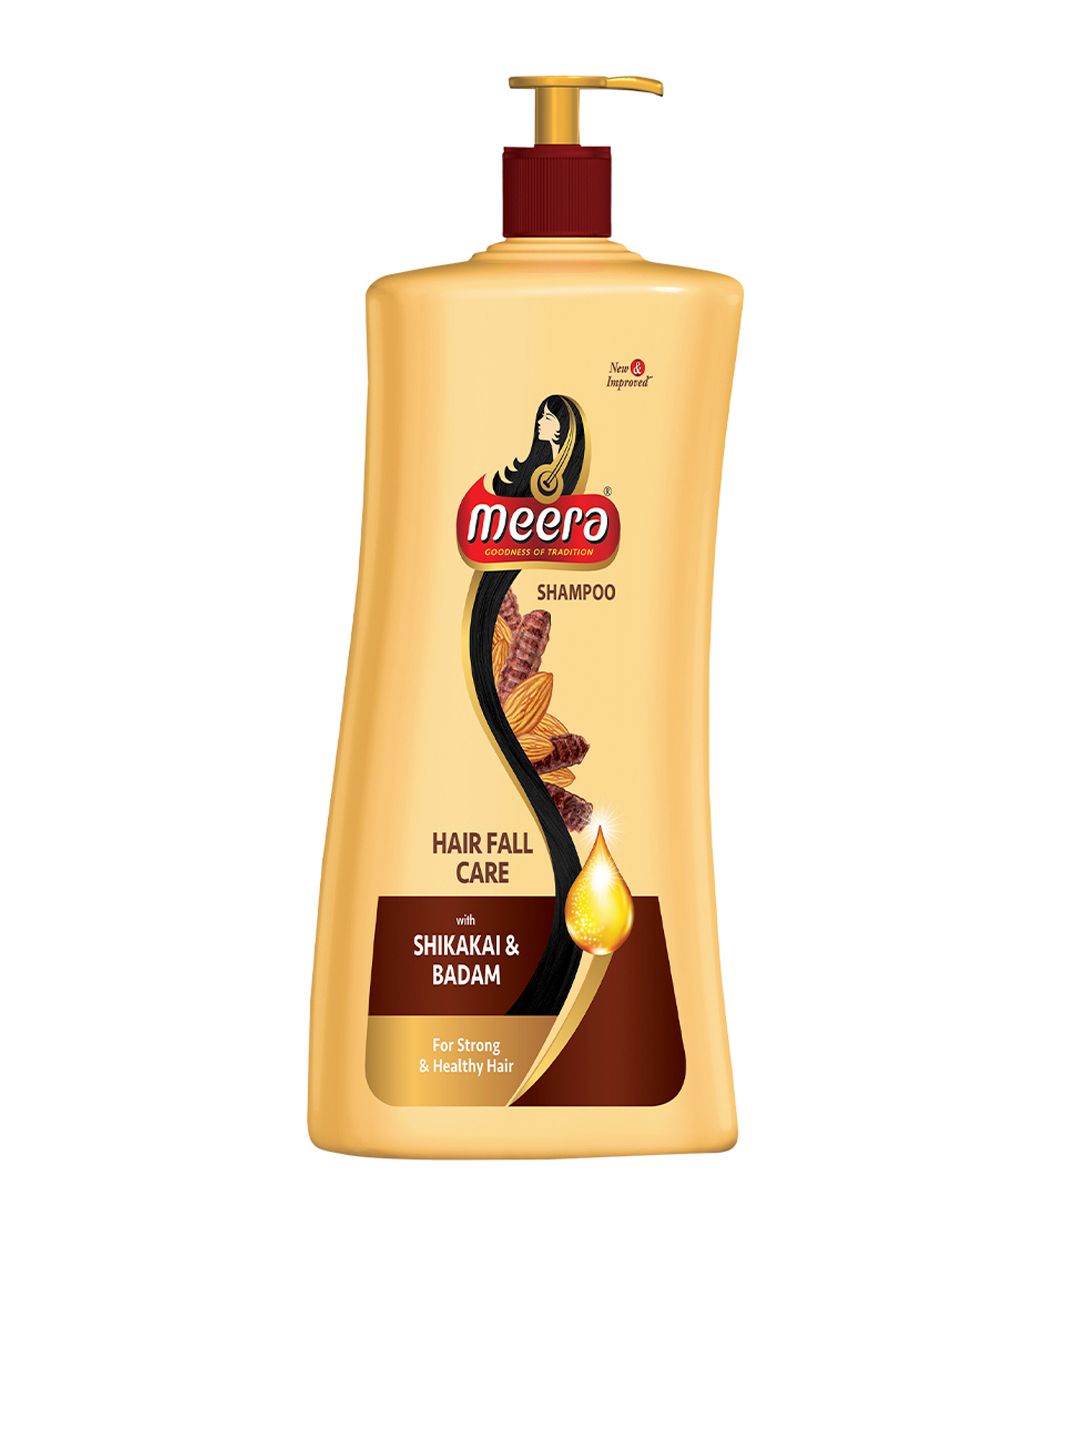 Meera GOODNESS OF TRADITION Hairfall Care Shampoo With Badam and Shikakai 1000ml Price in India